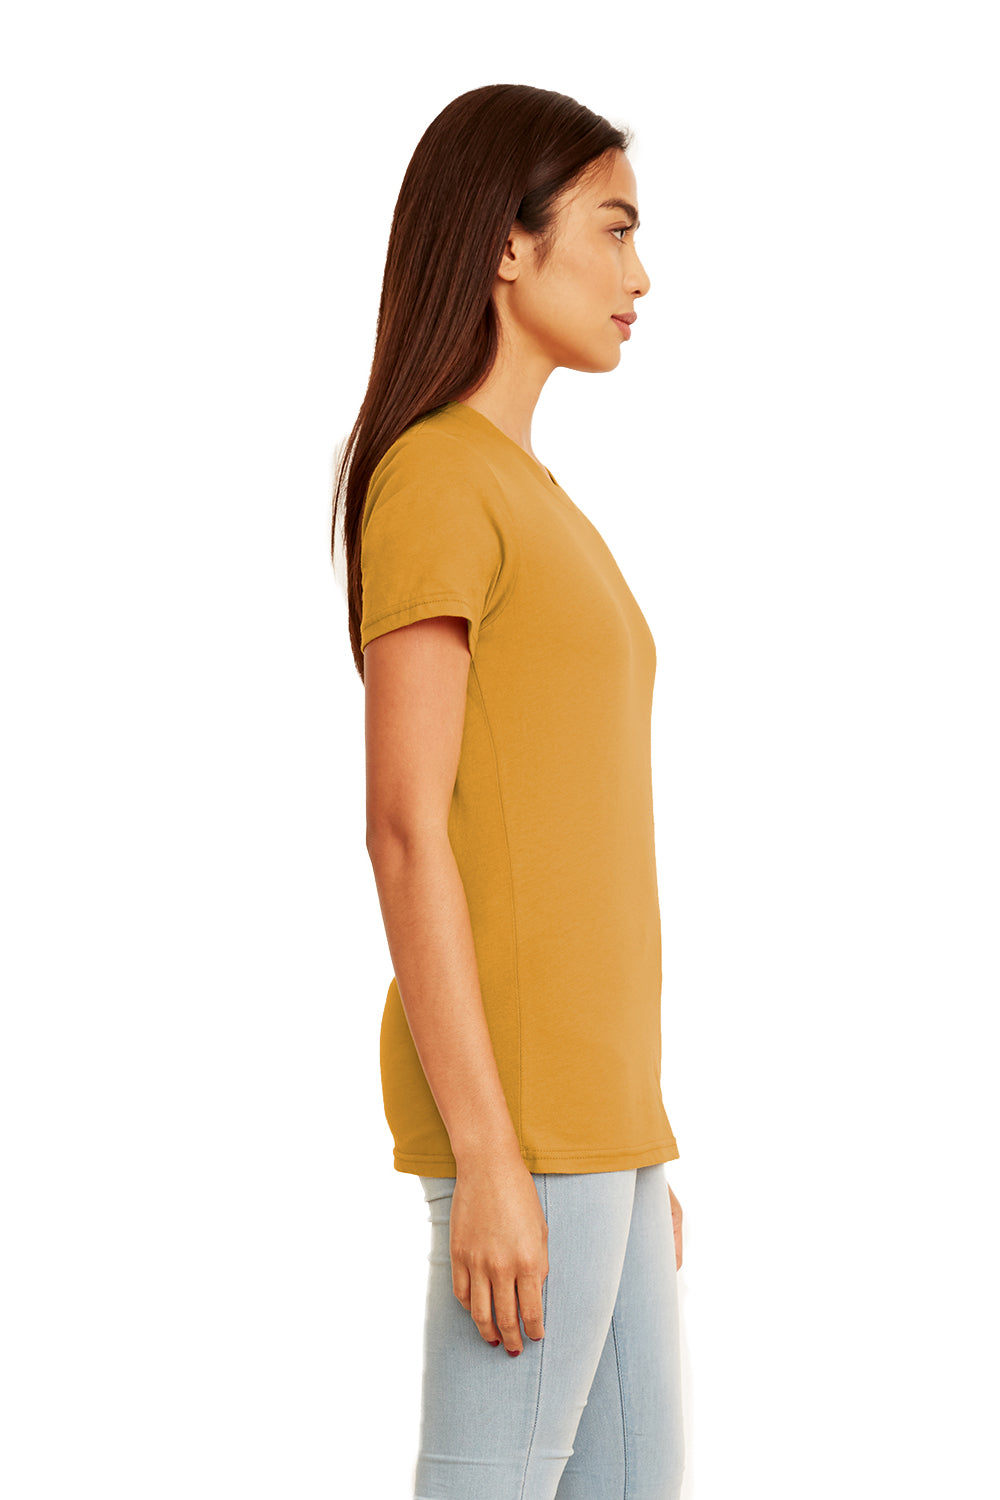 Next Level N3900 Womens Boyfriend Fine Jersey Short Sleeve Crewneck T-Shirt Antique Gold Side